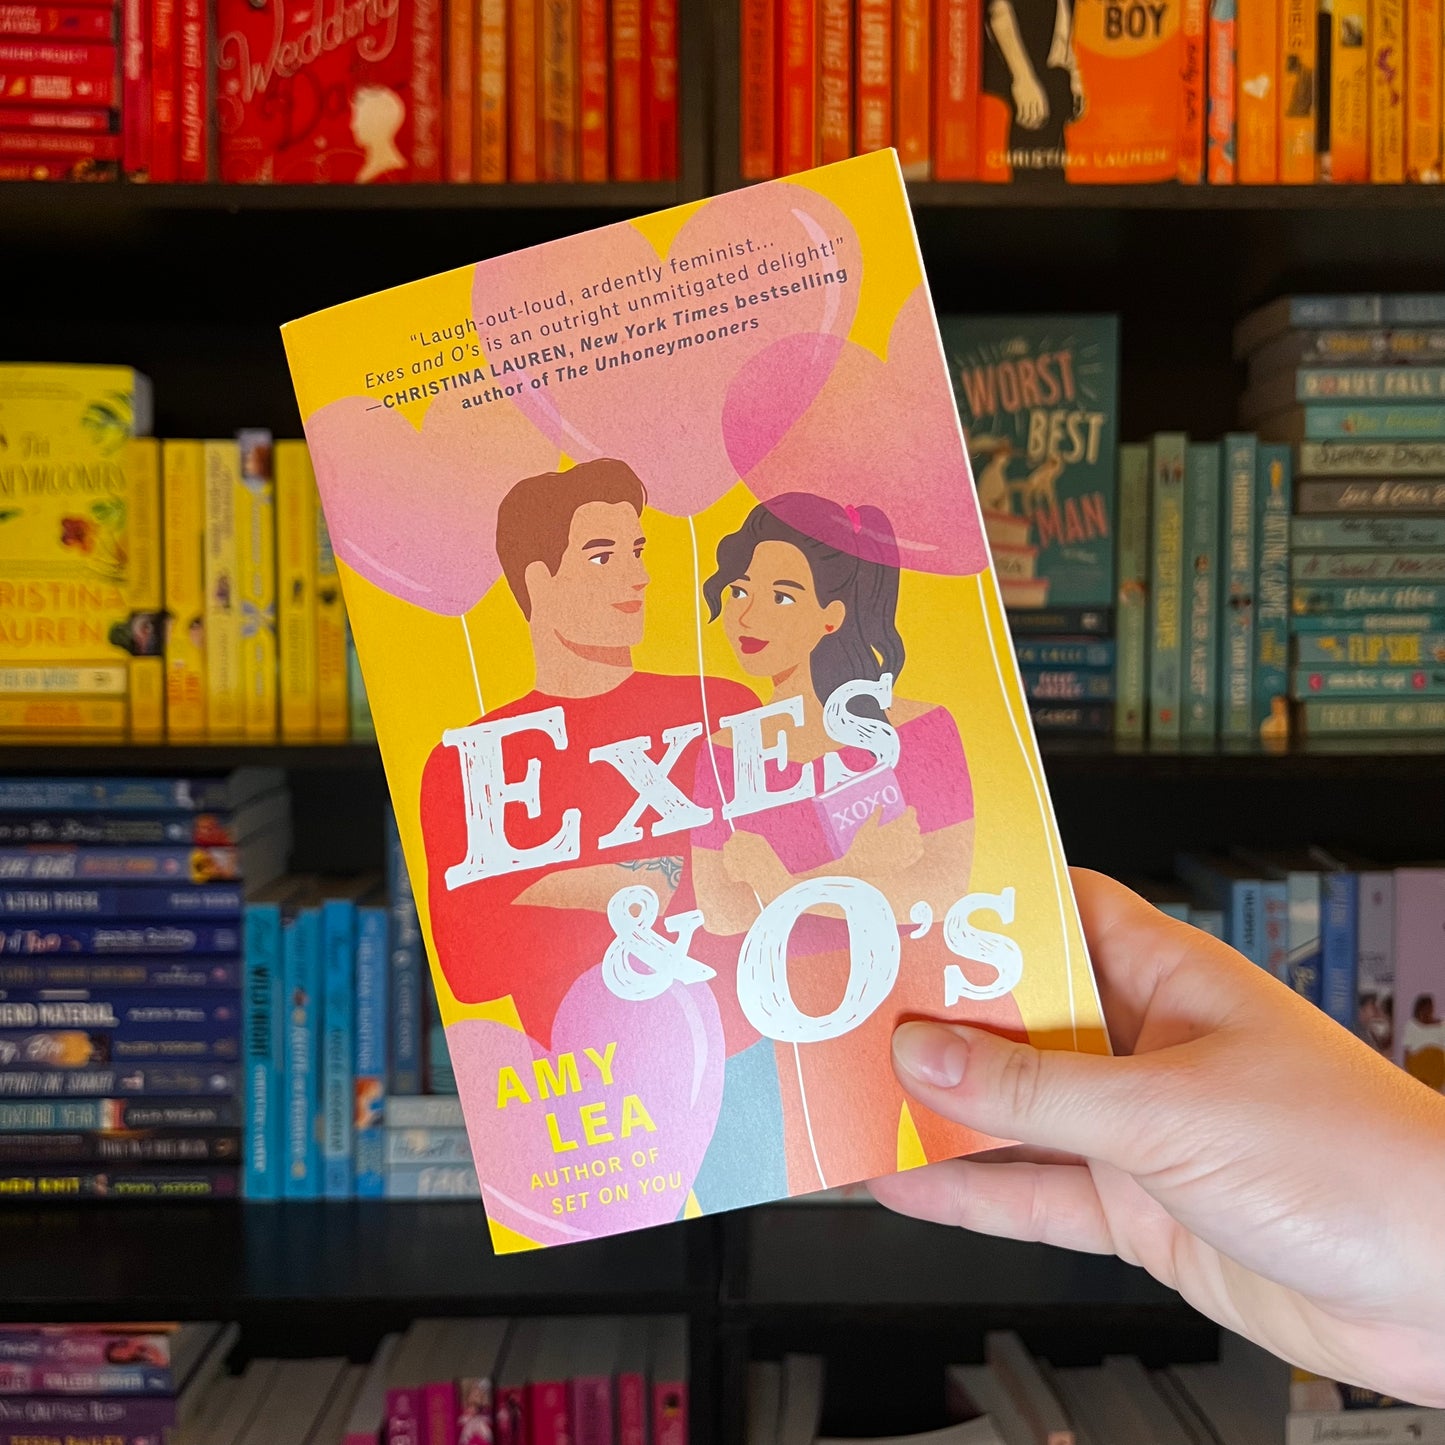 Exes & O's by Amy Lea